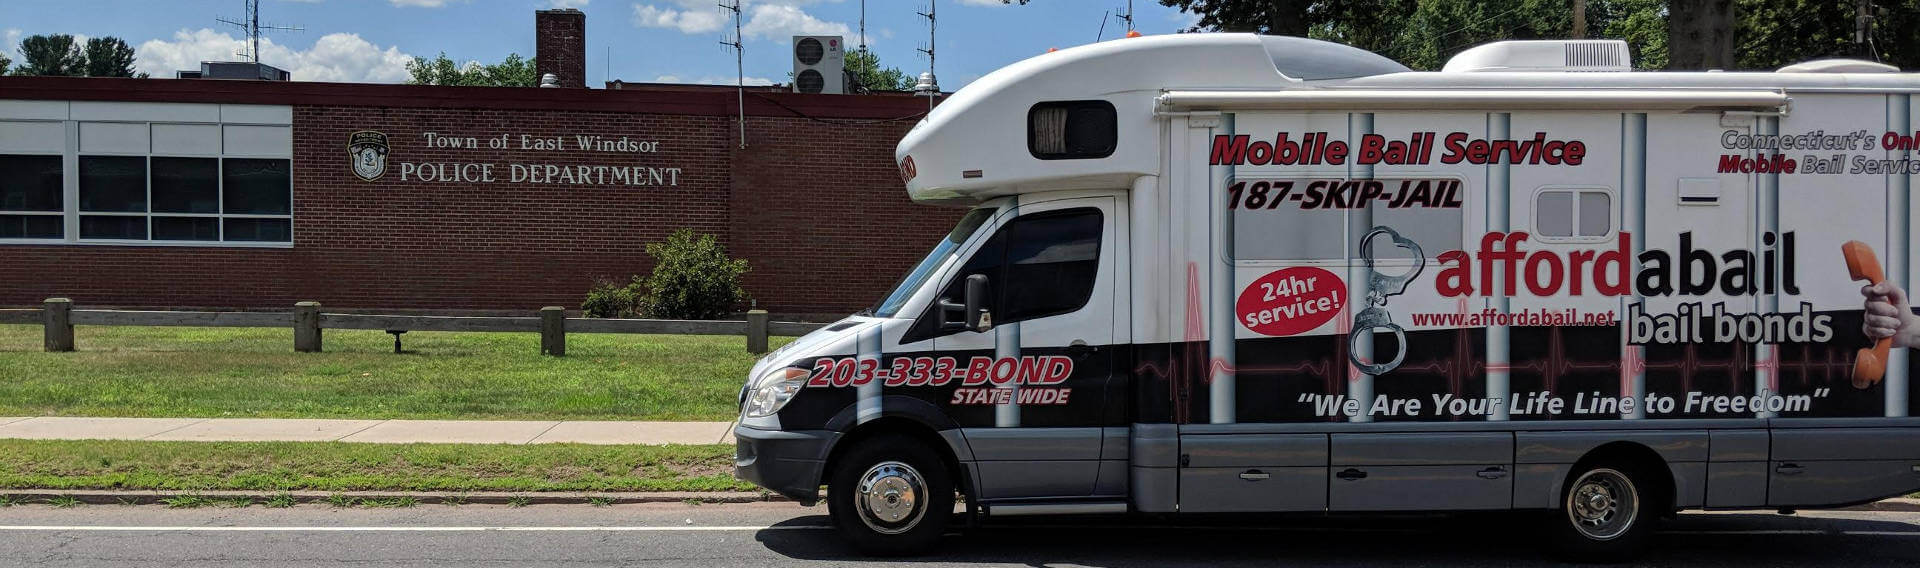 Mobile bail bonds service in East Winsdor, CT